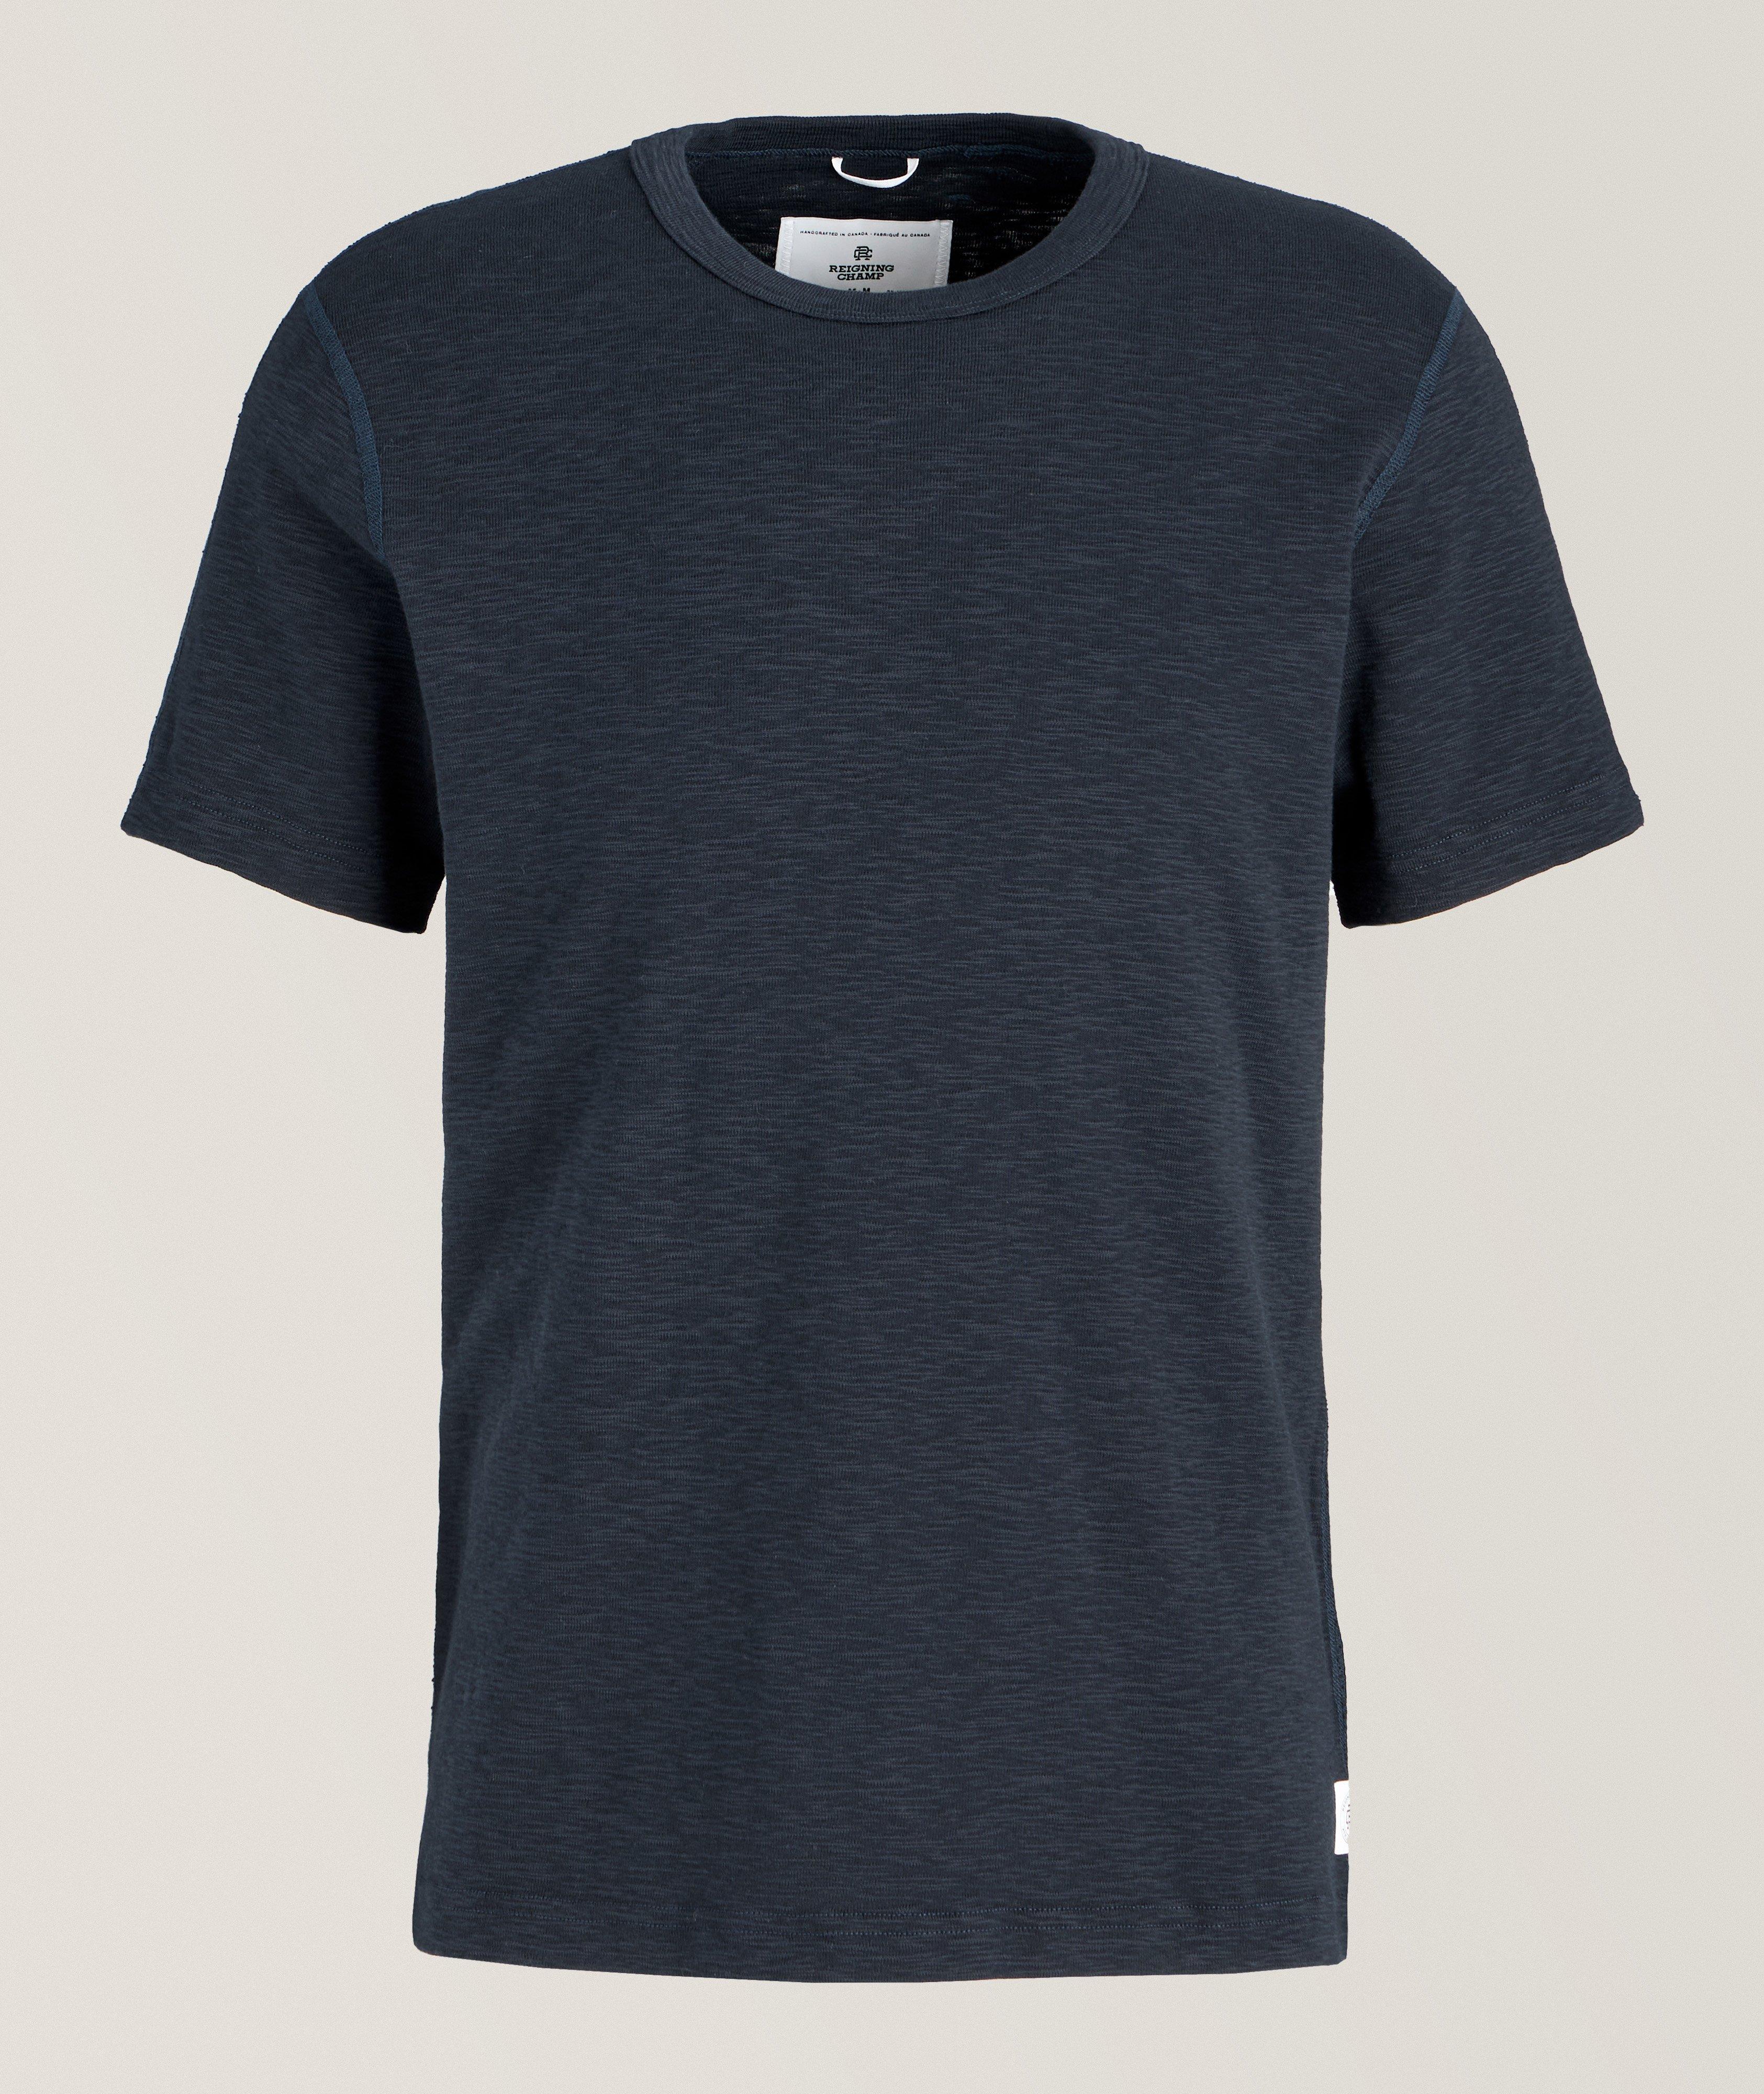 Short-Sleeve Slub Cotton T-Shirt image 0